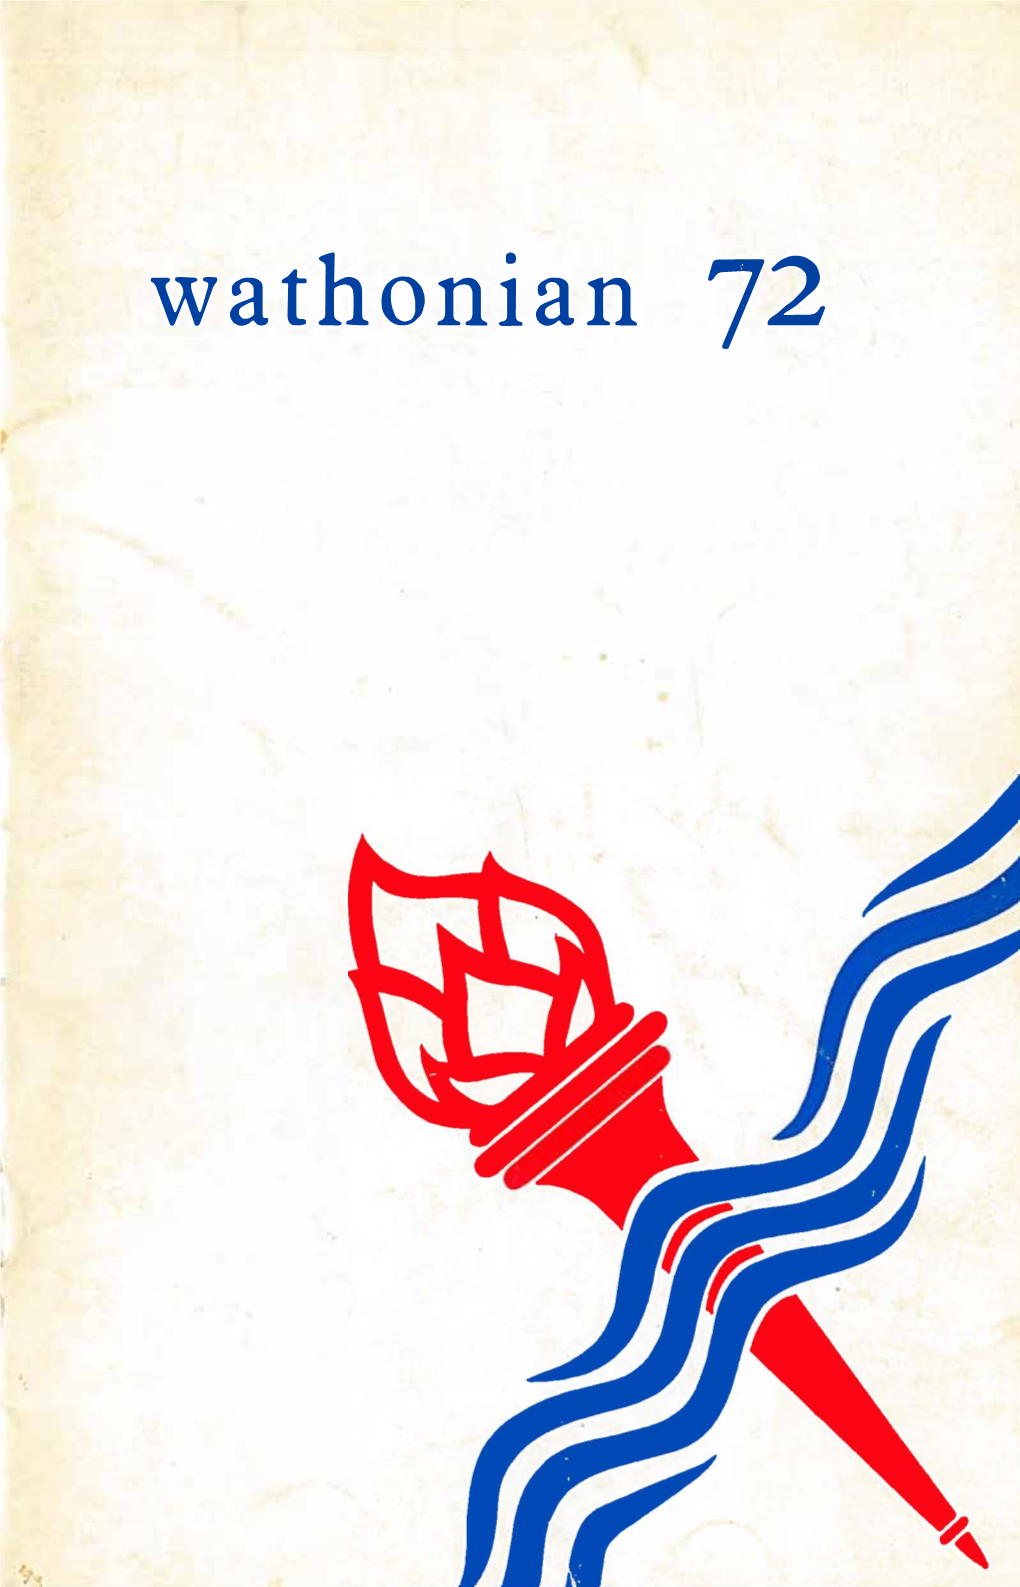 The Wathonian, 1972